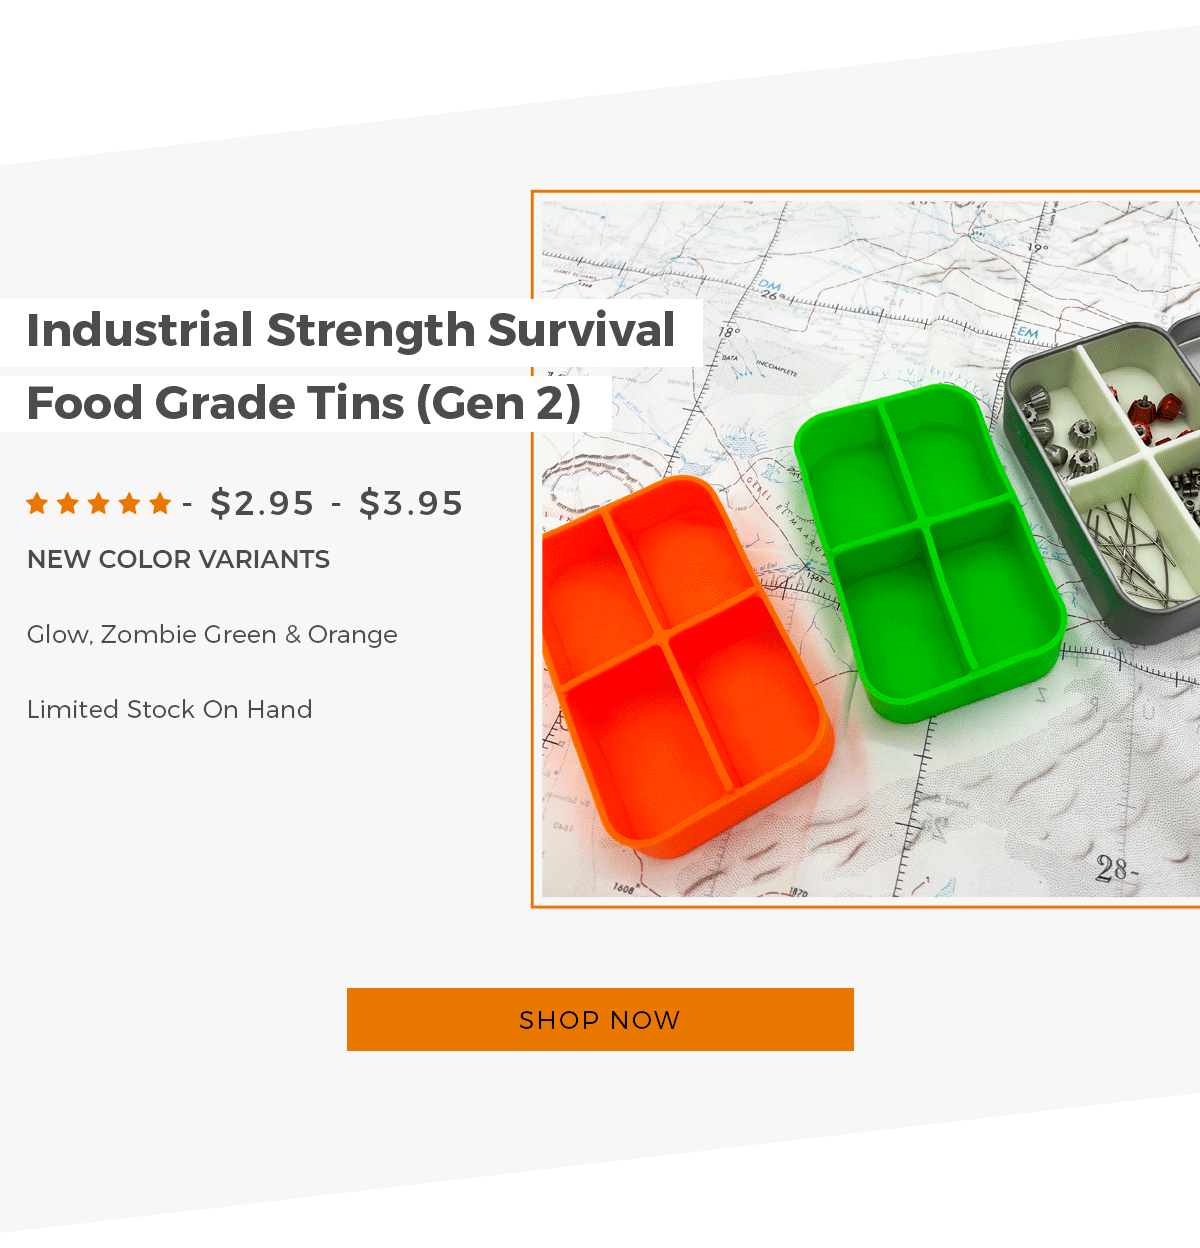 Industrial Strength Survival Food Grade Tins (Gen 2)